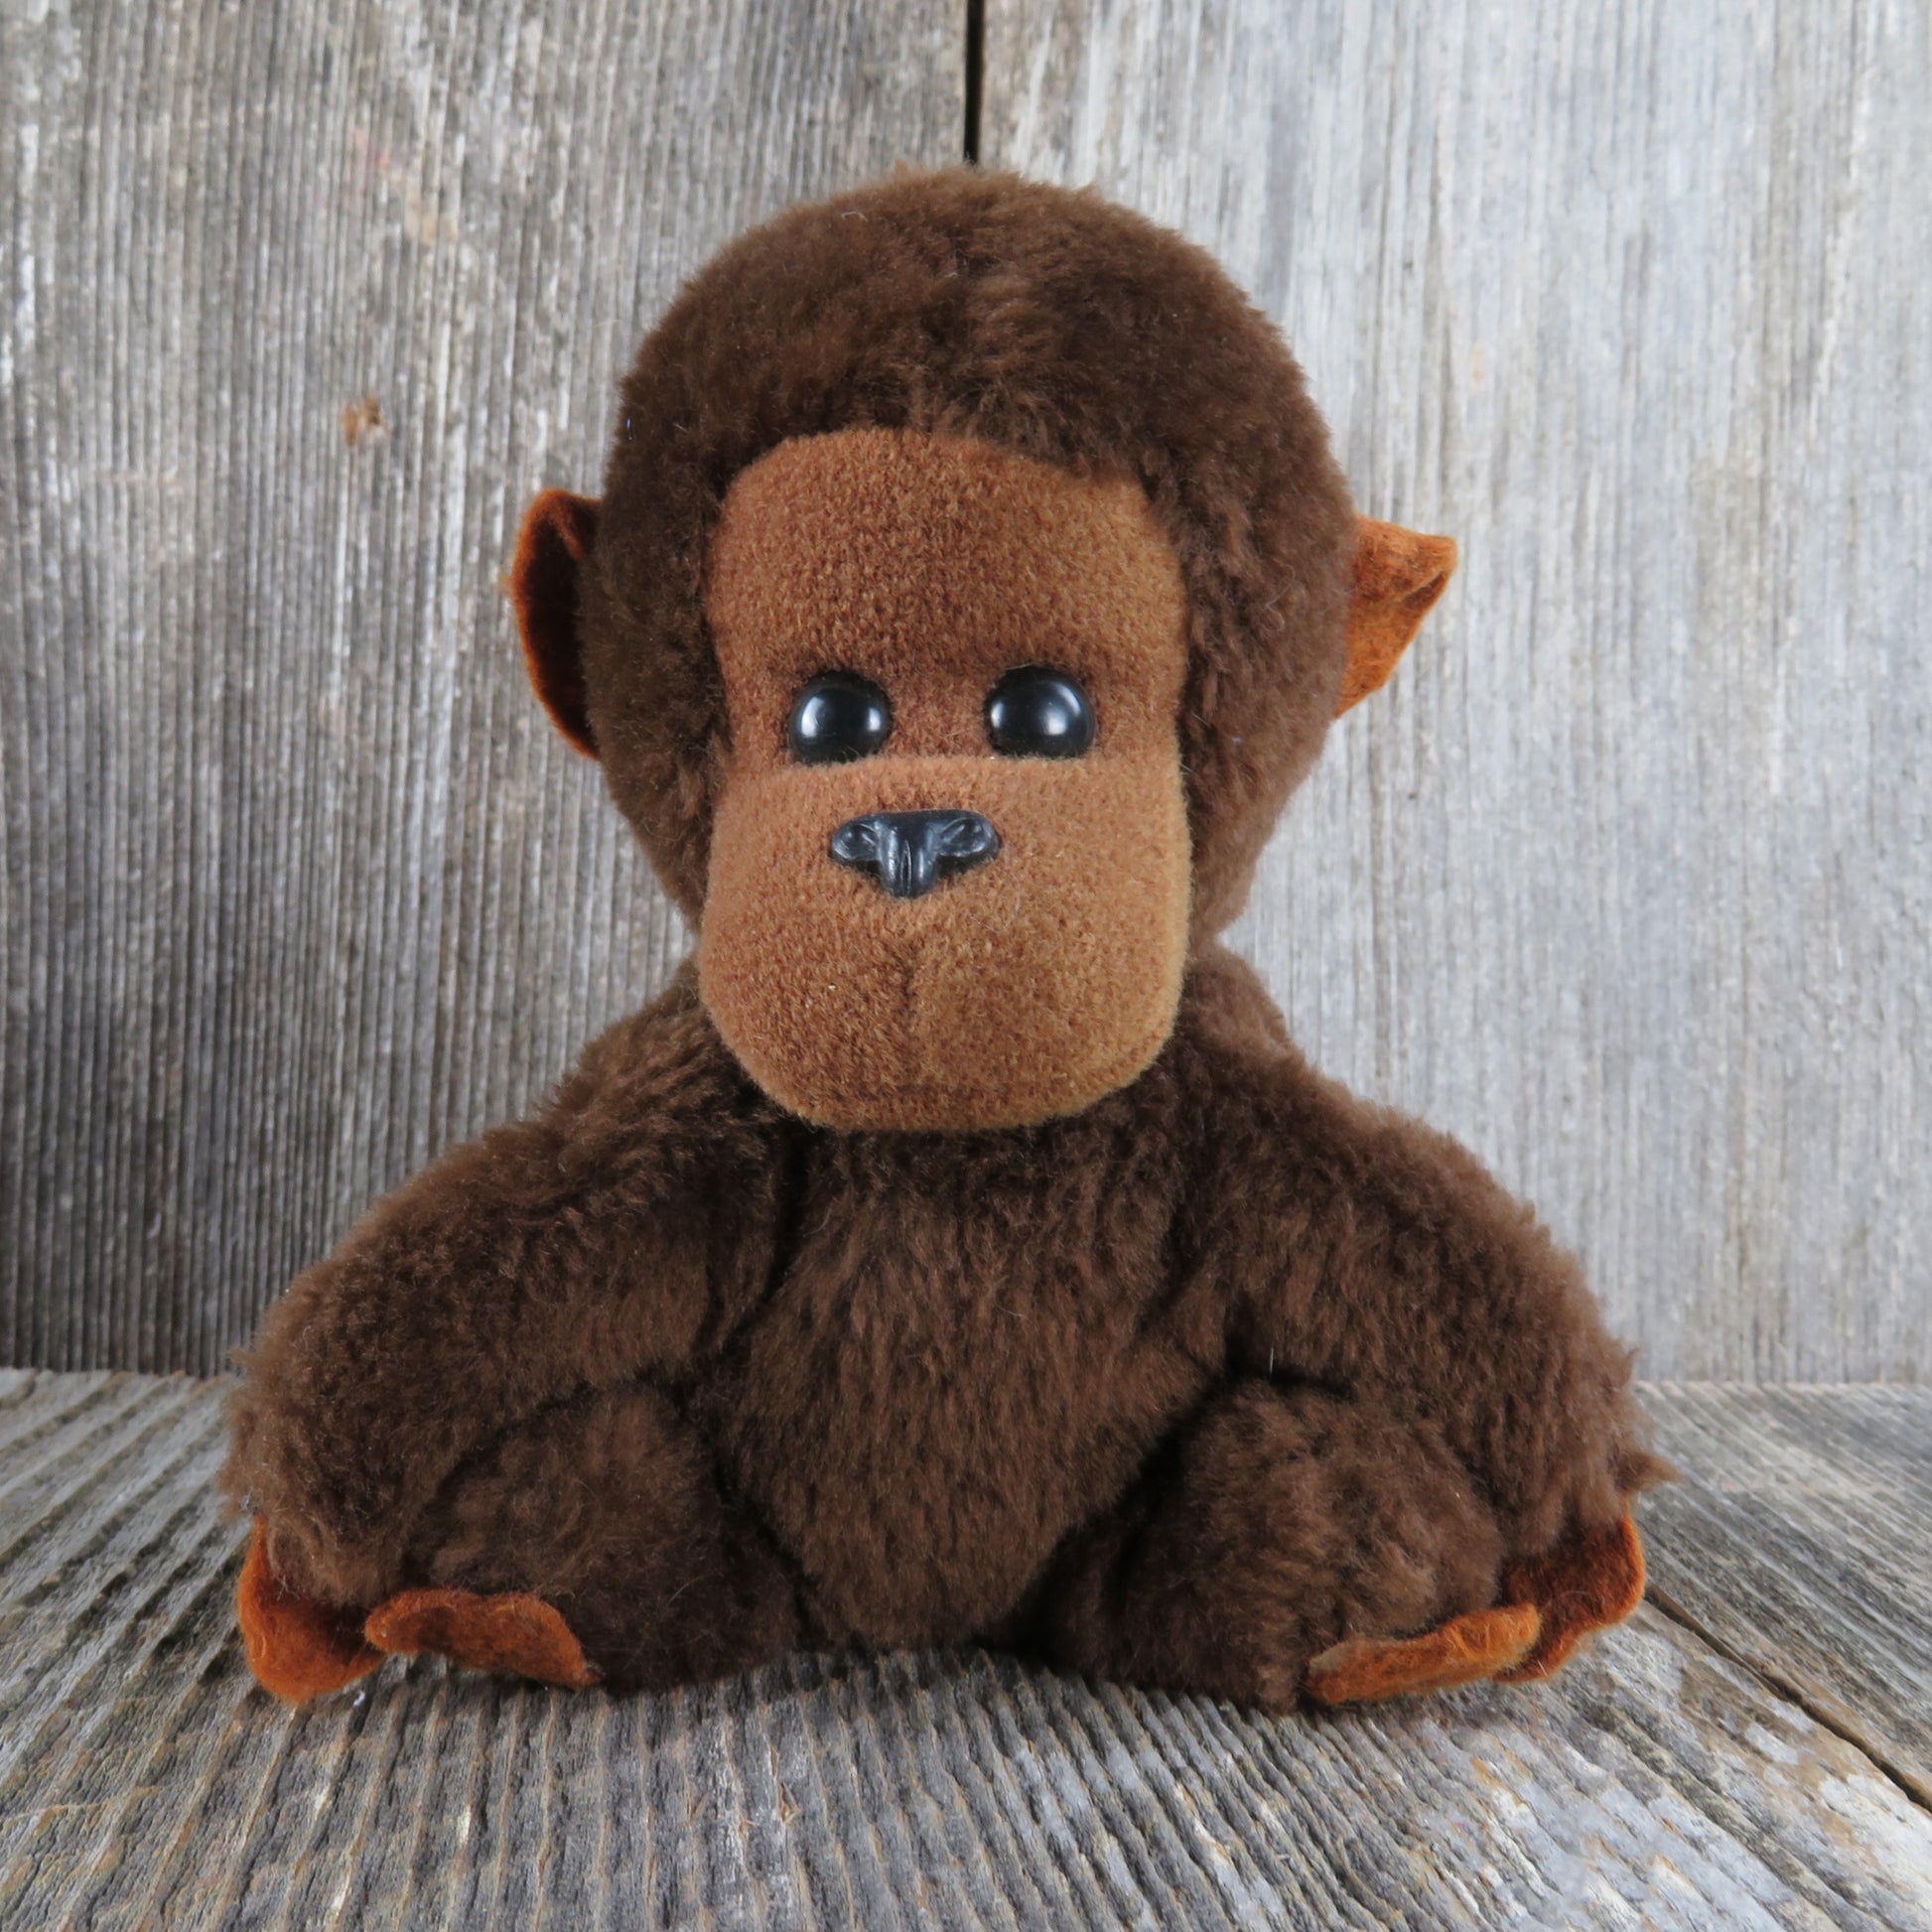 Vintage Gorilla Plush Dakin Monkey Chimp Chimpanzee Stuffed Animal Toy Doll 1981 - At Grandma's Table